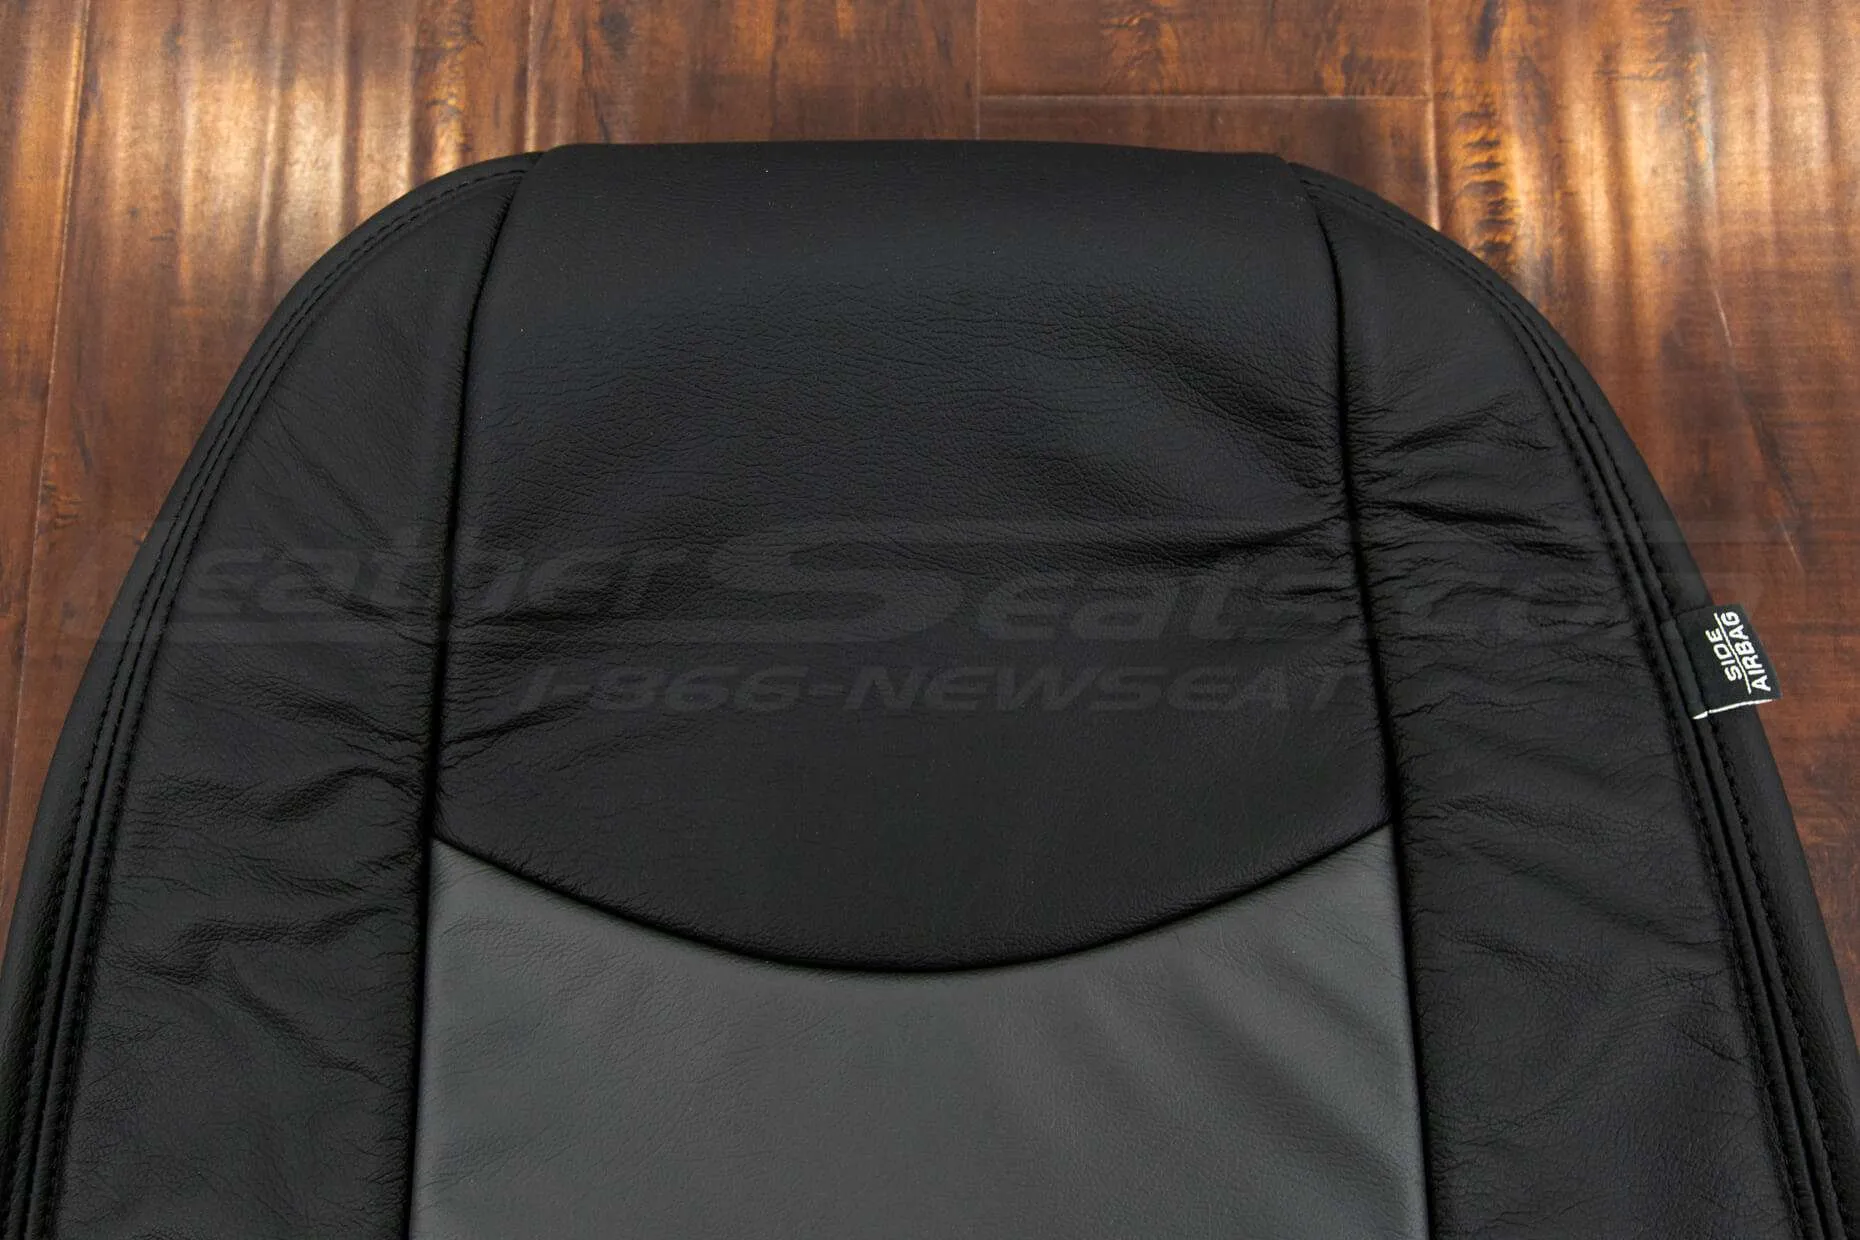 Chevrolet Spark upholstery - kit black & charcoal - Top of backrest close-up